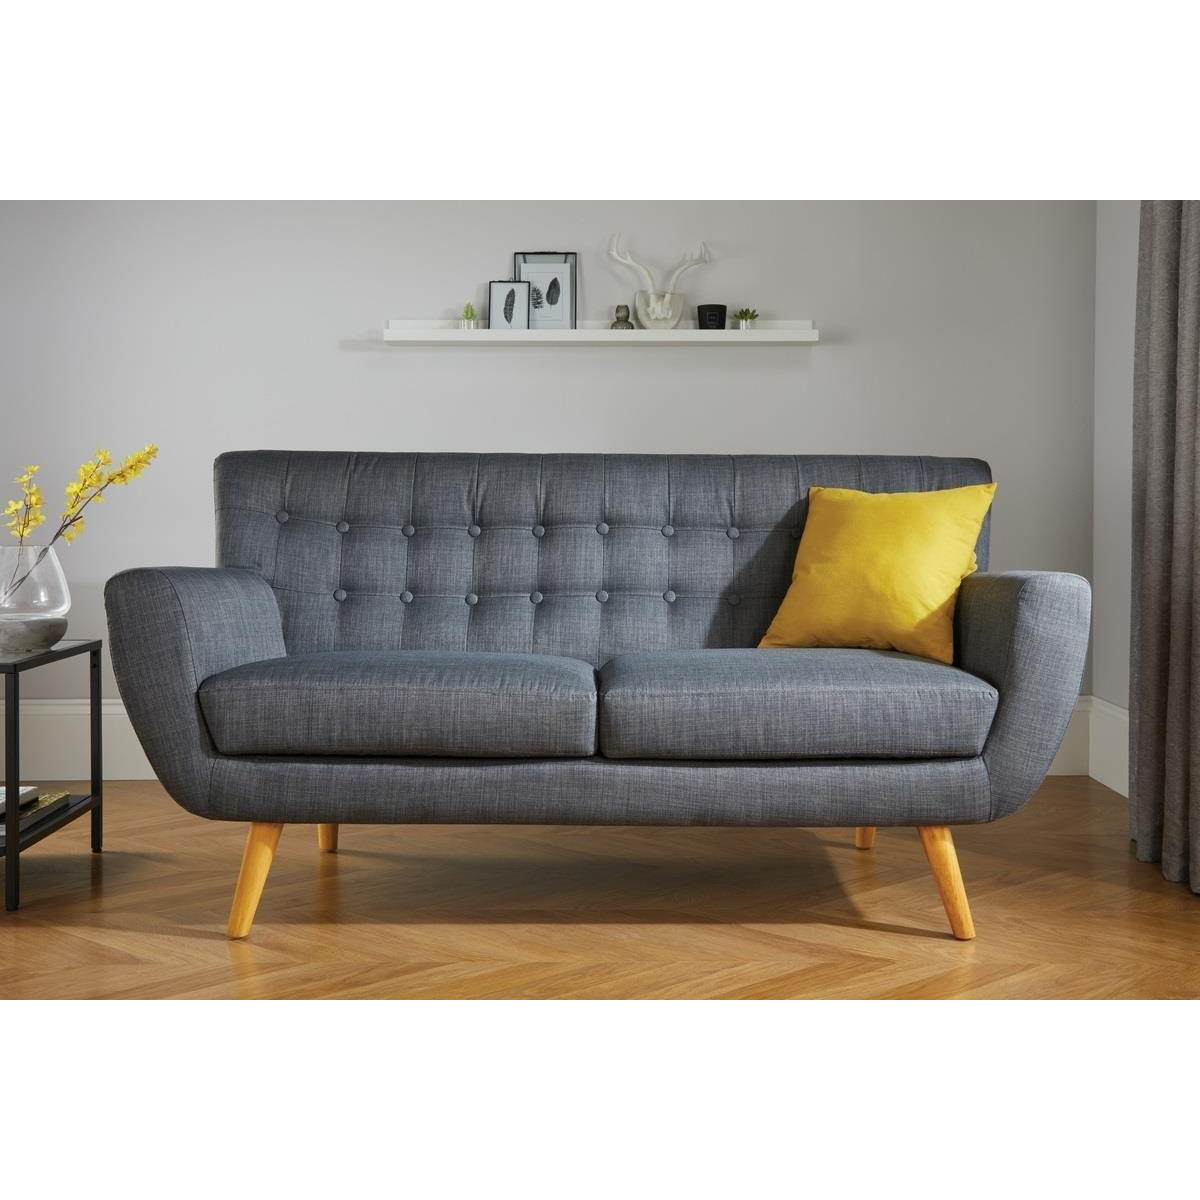 3 Seater Sofa Grey Birlea Loft Settee Modern Retro Style Fabric Wooden Legs - image 1